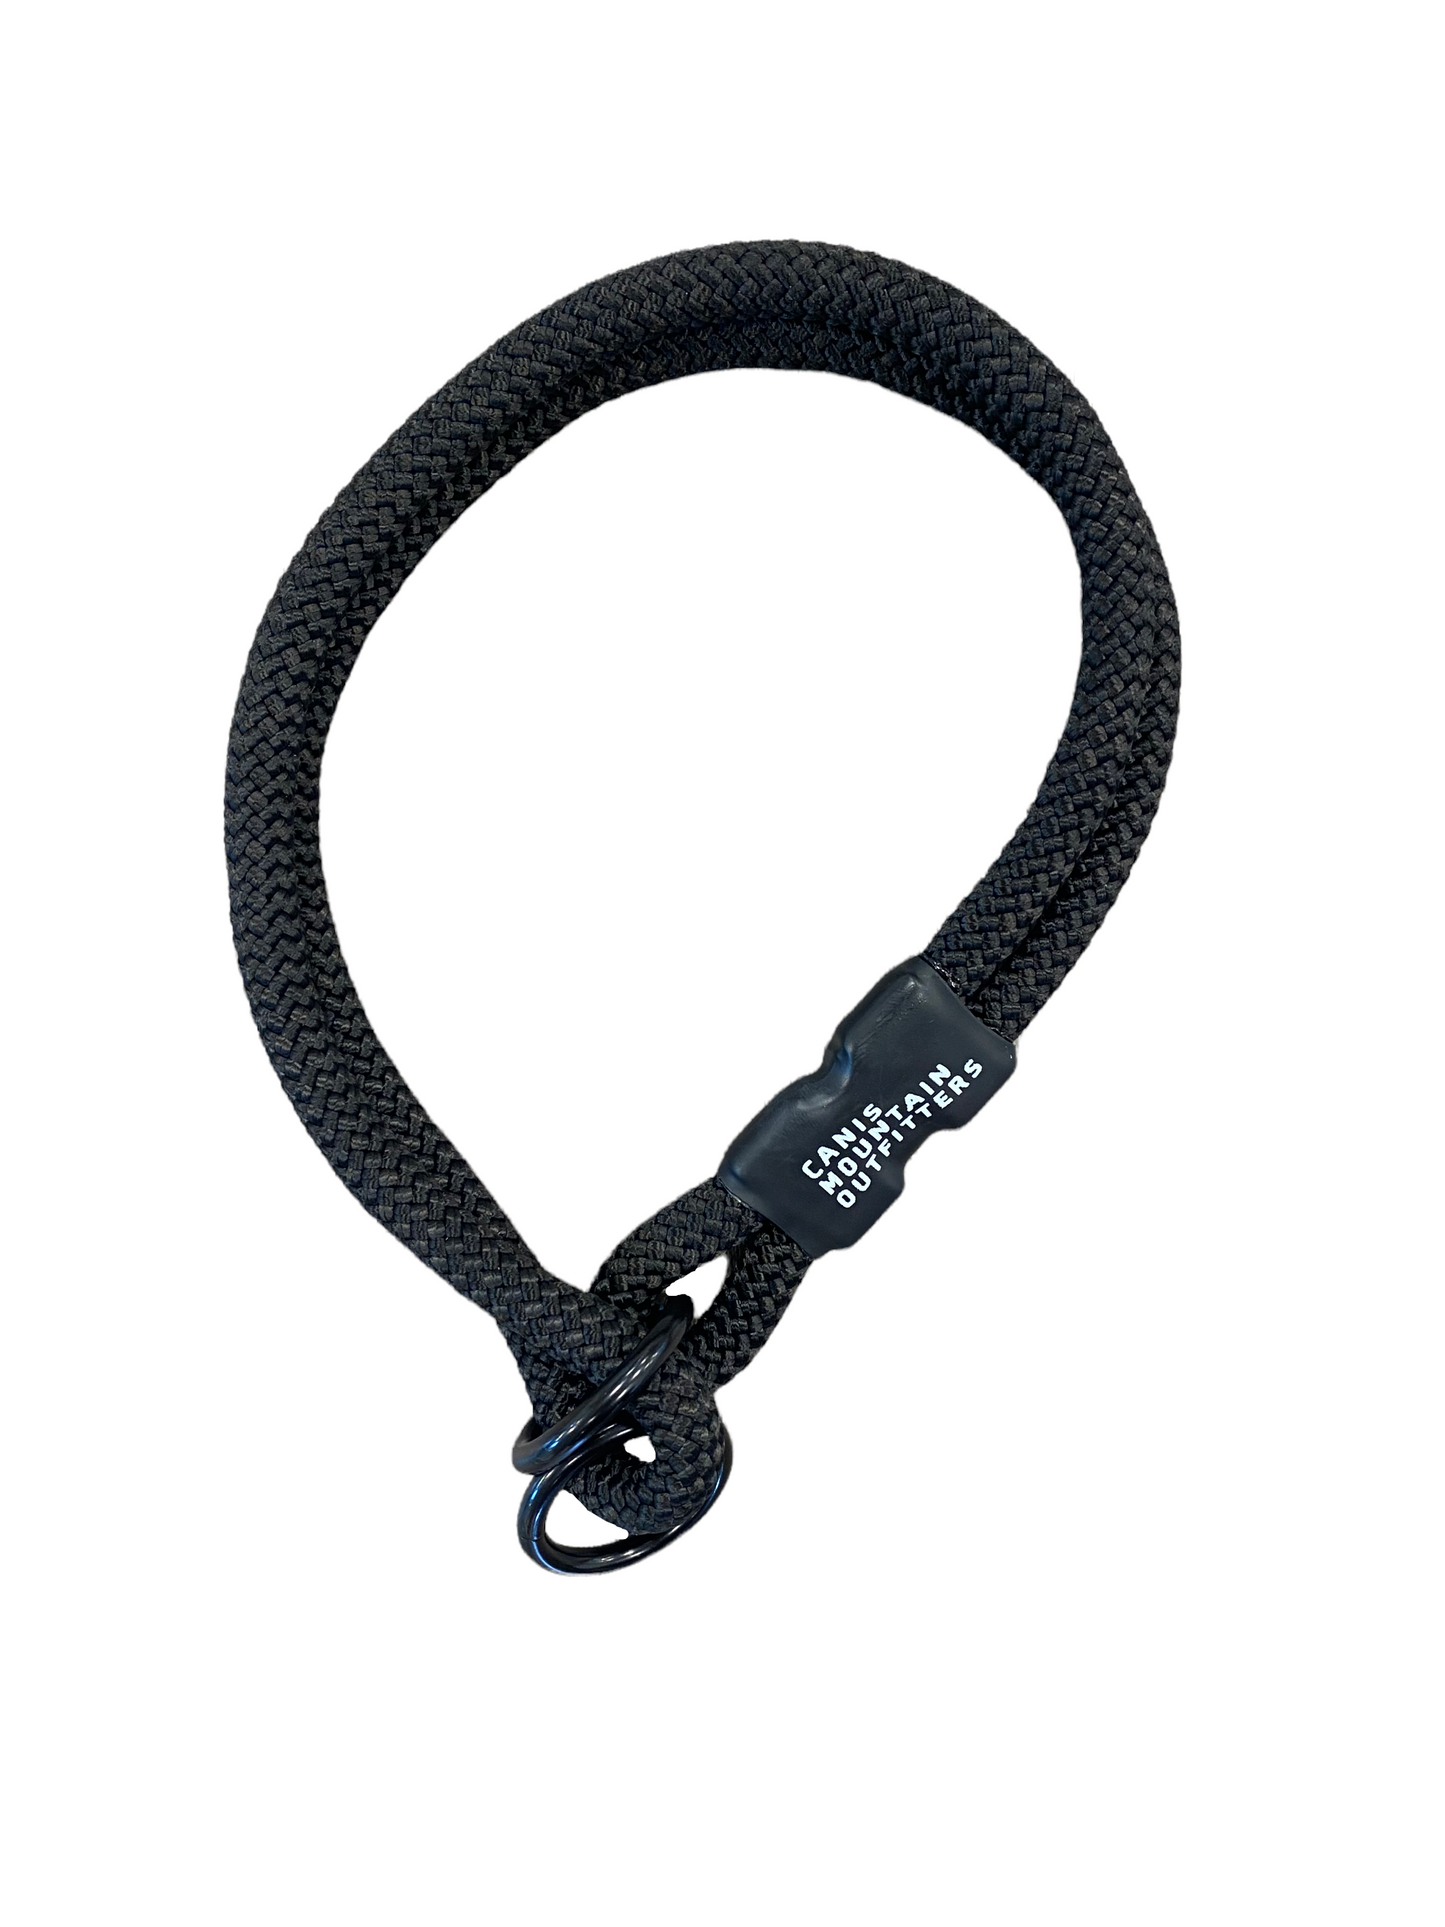 Slip Collar - Rugged Series - Black 10mm